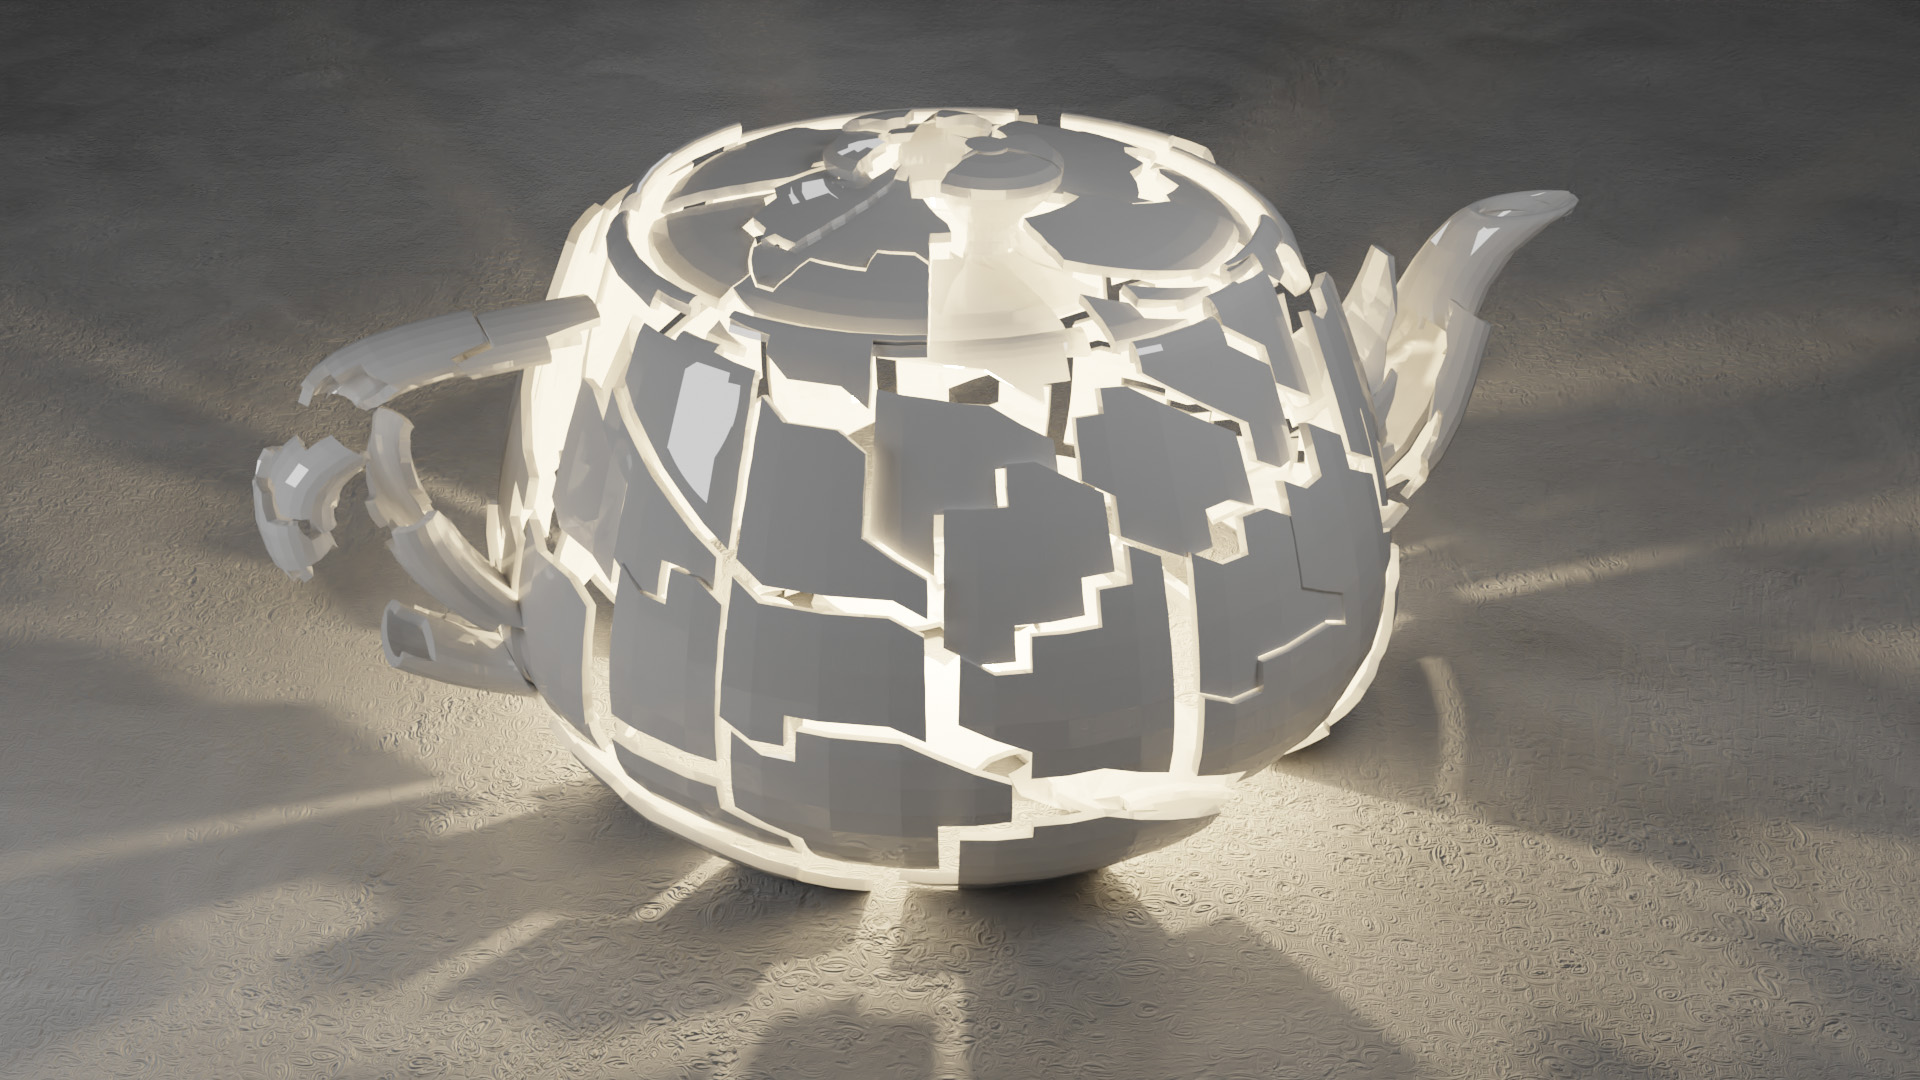 Render of a broken Utah teapot with light inside